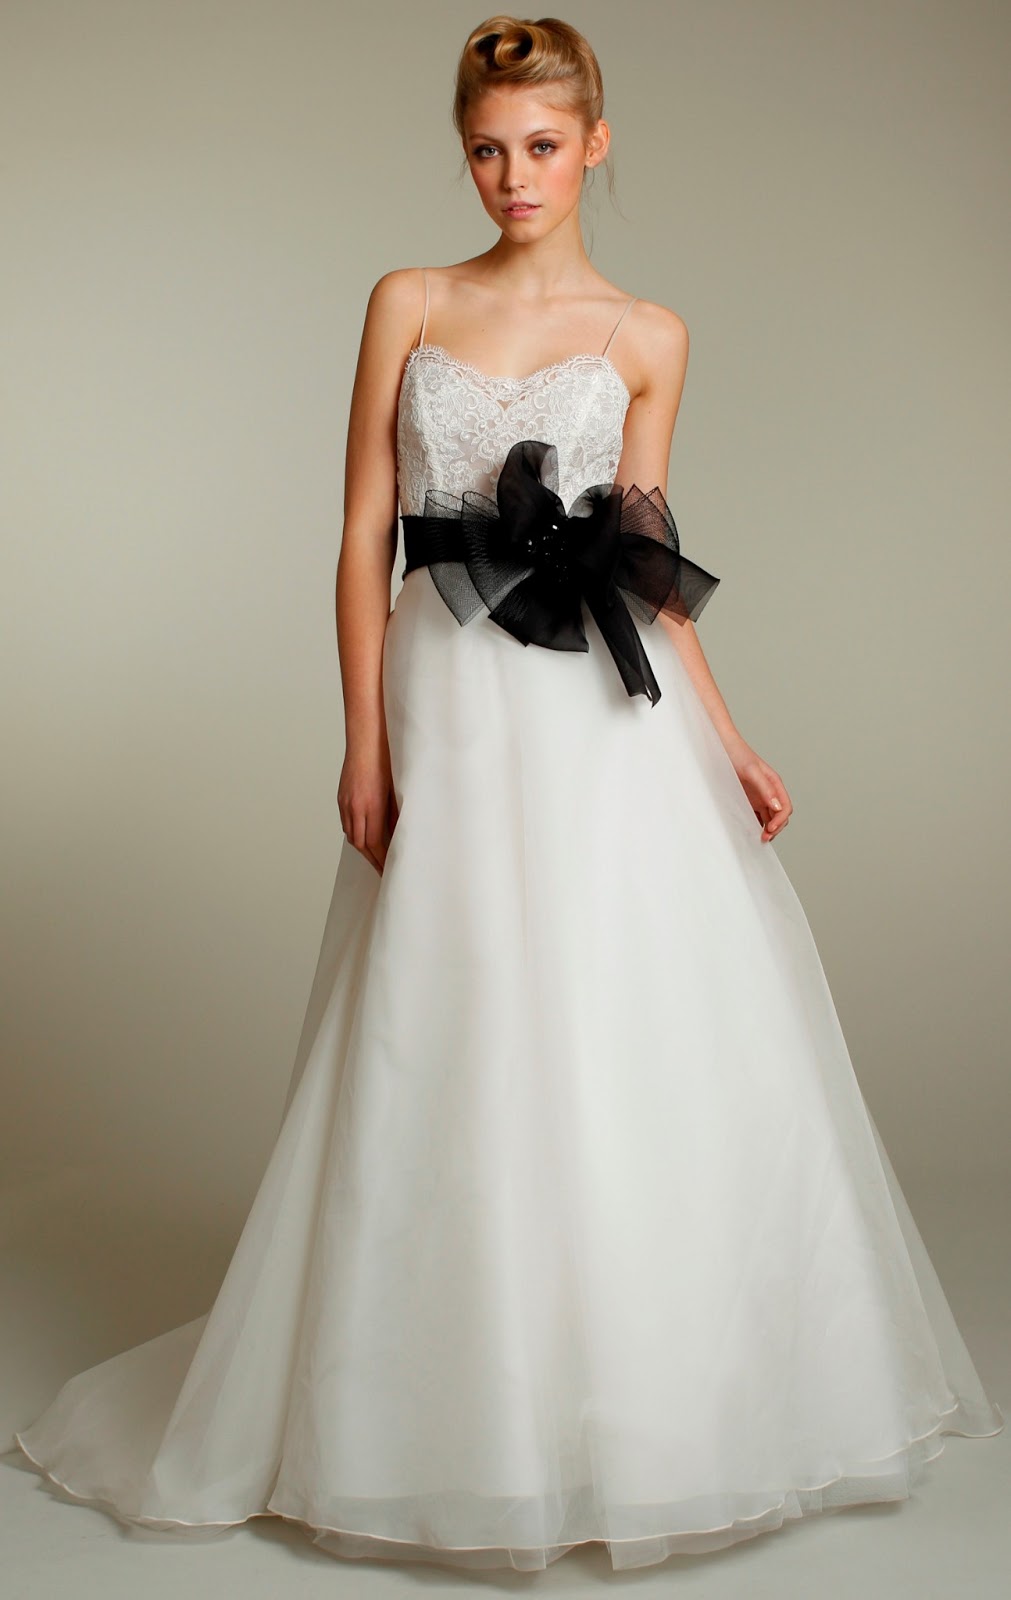 Choose Your Fashion Style: Wedding Dresses with Black Sashes